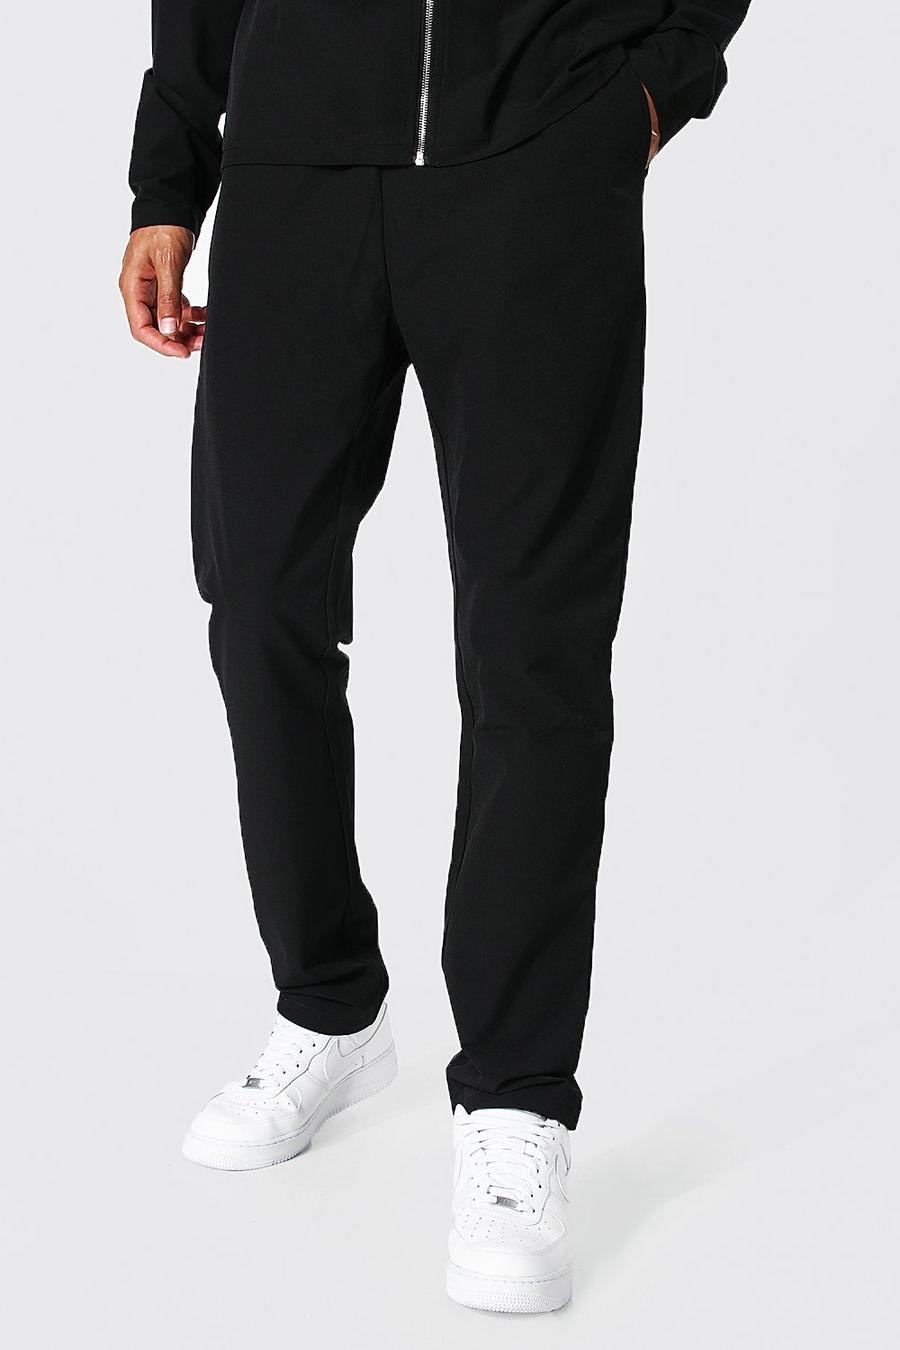 Pantaloni Tall affusolati con vita elasticizzata, Black negro image number 1